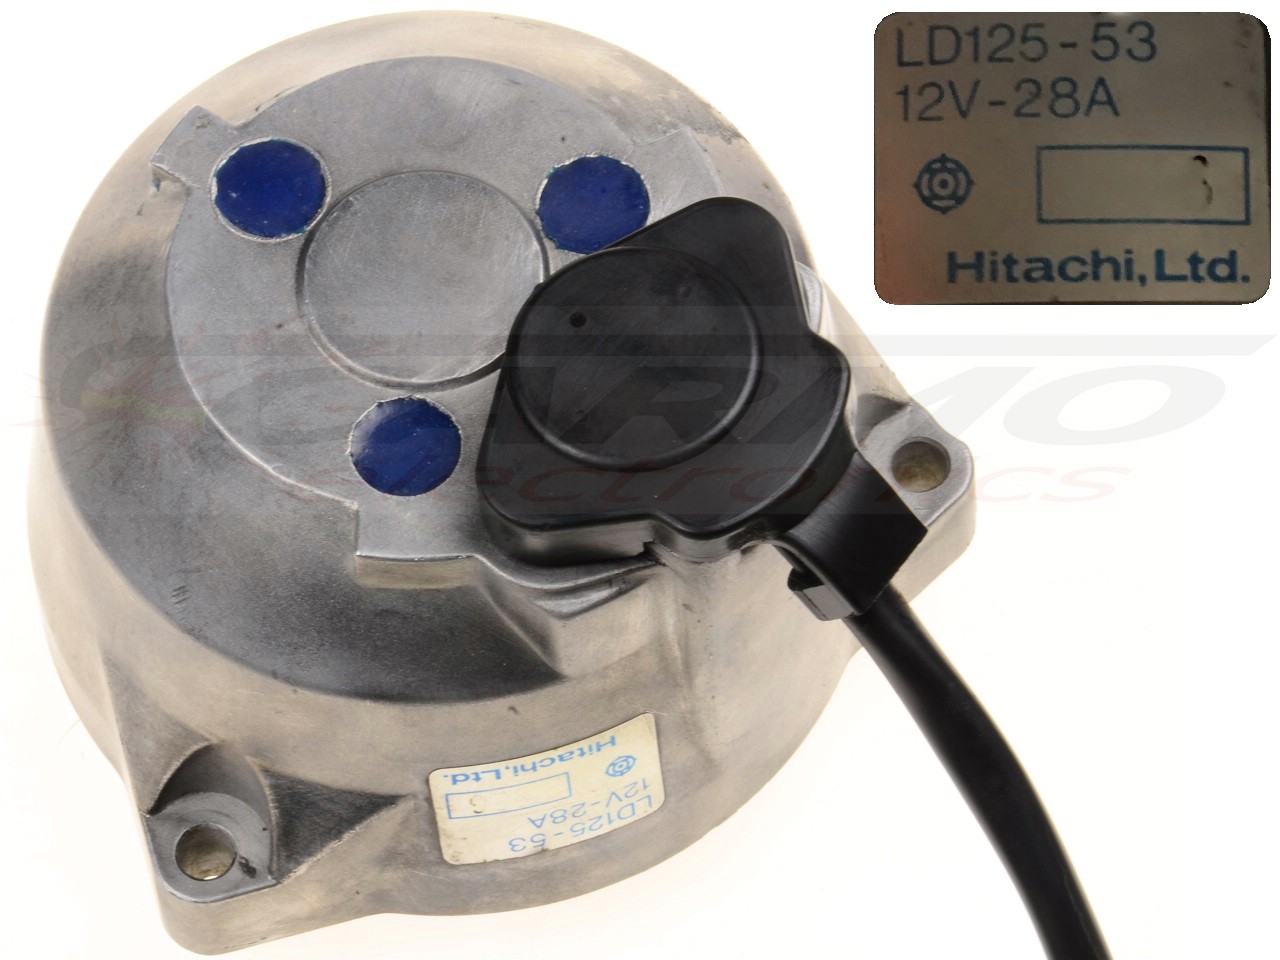 Honda ST1100 Pan European LD125-53 stator alternator rewinding - Click Image to Close